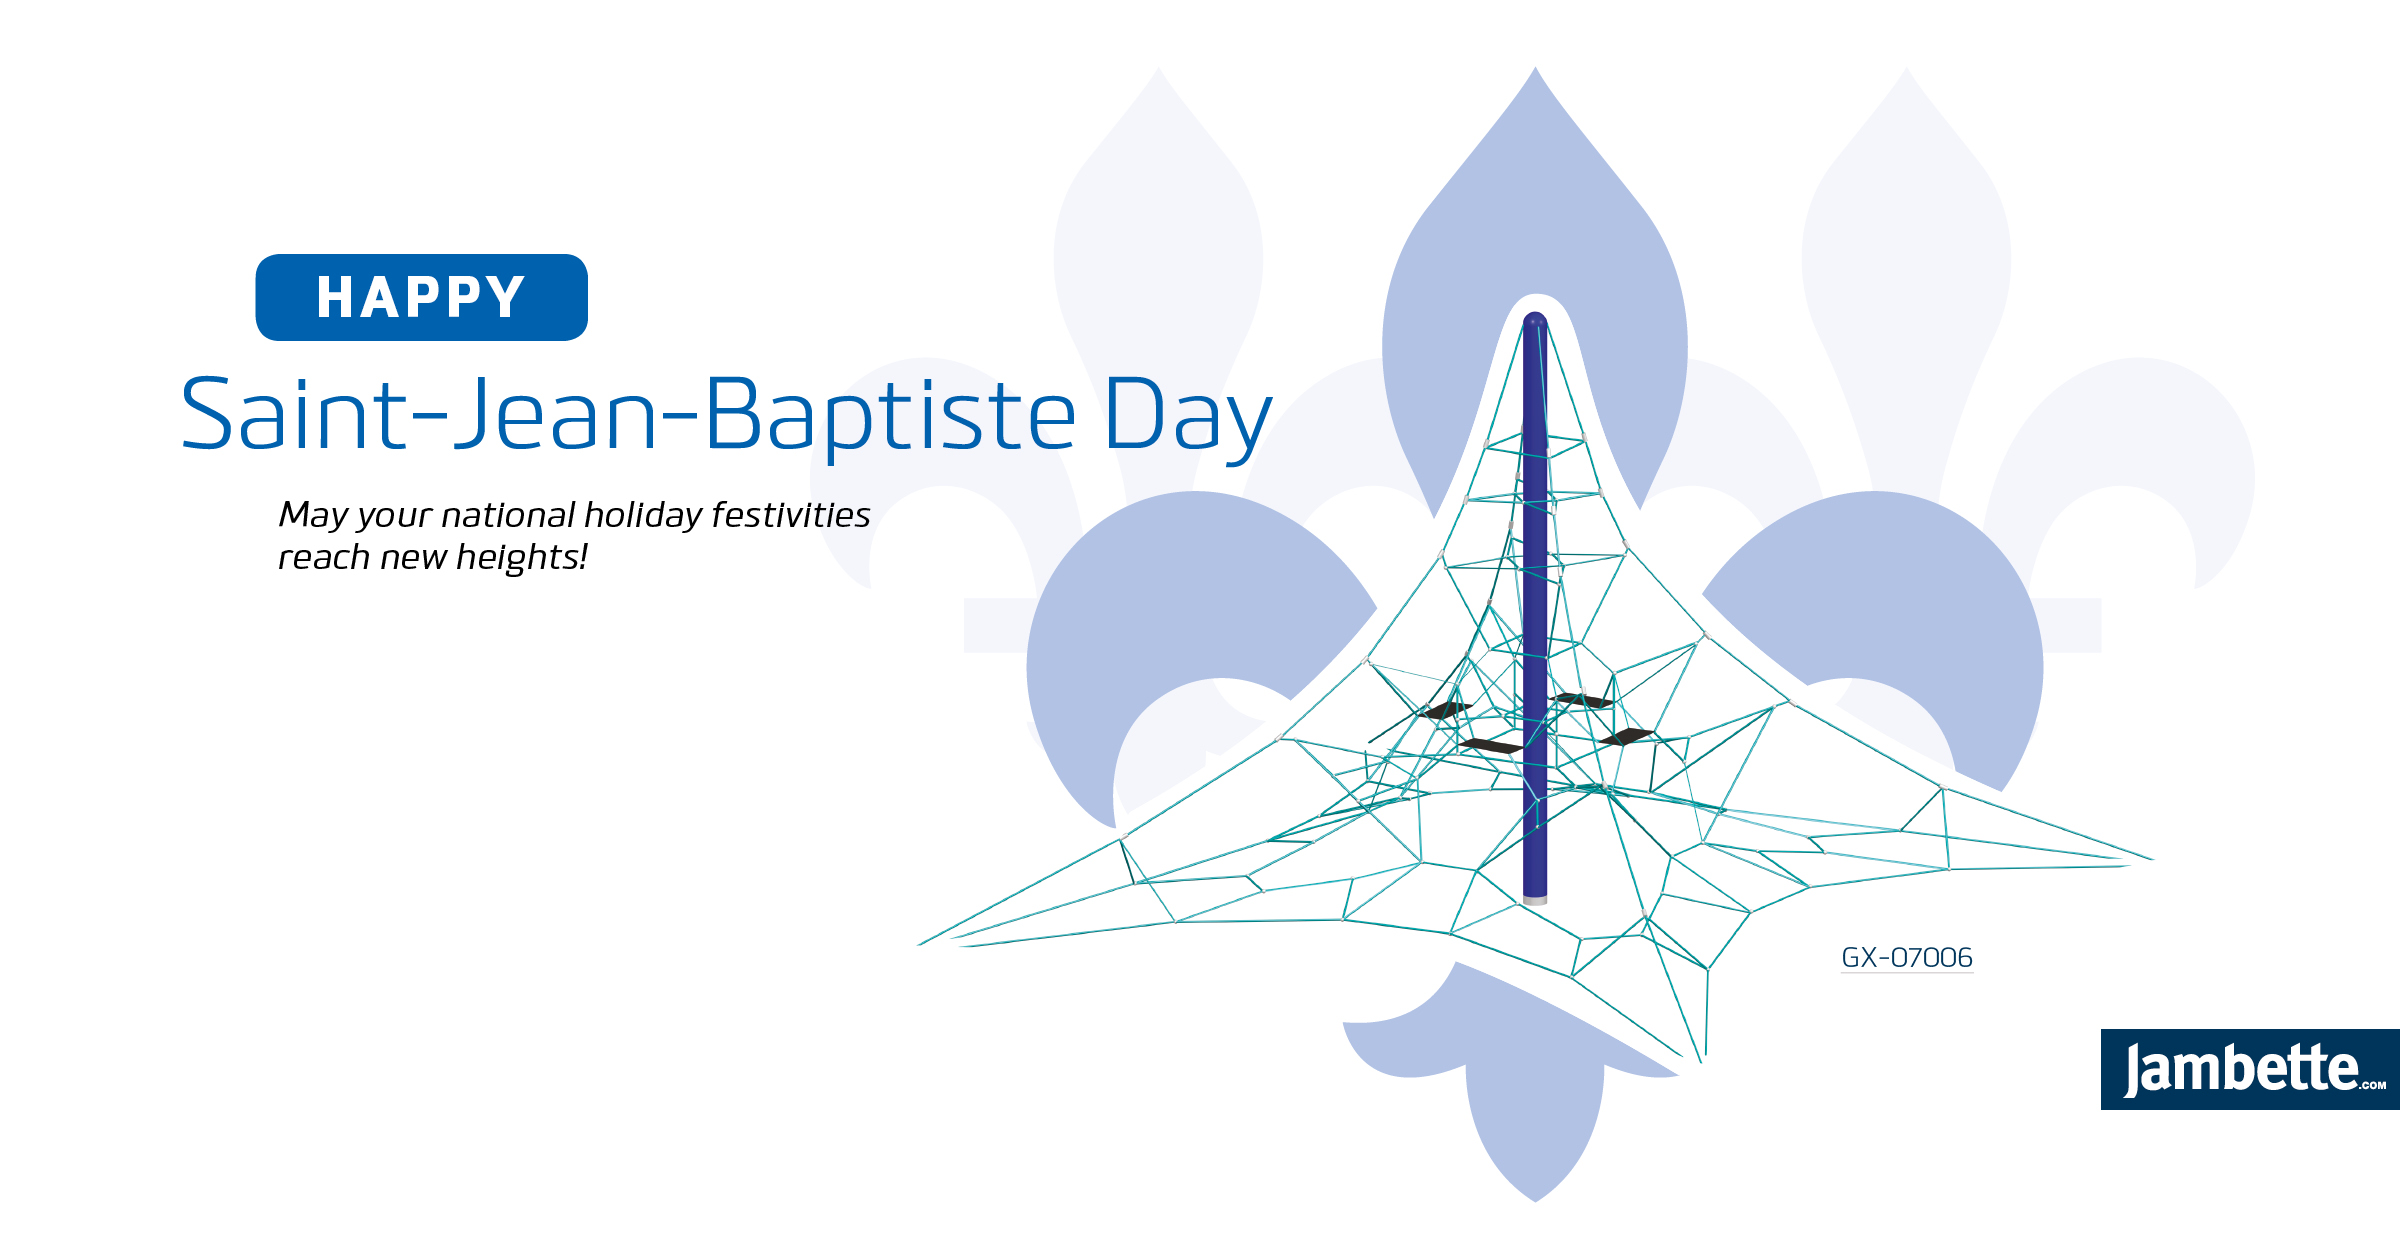 Happy Saint-Jean-Baptiste Day from Jambette